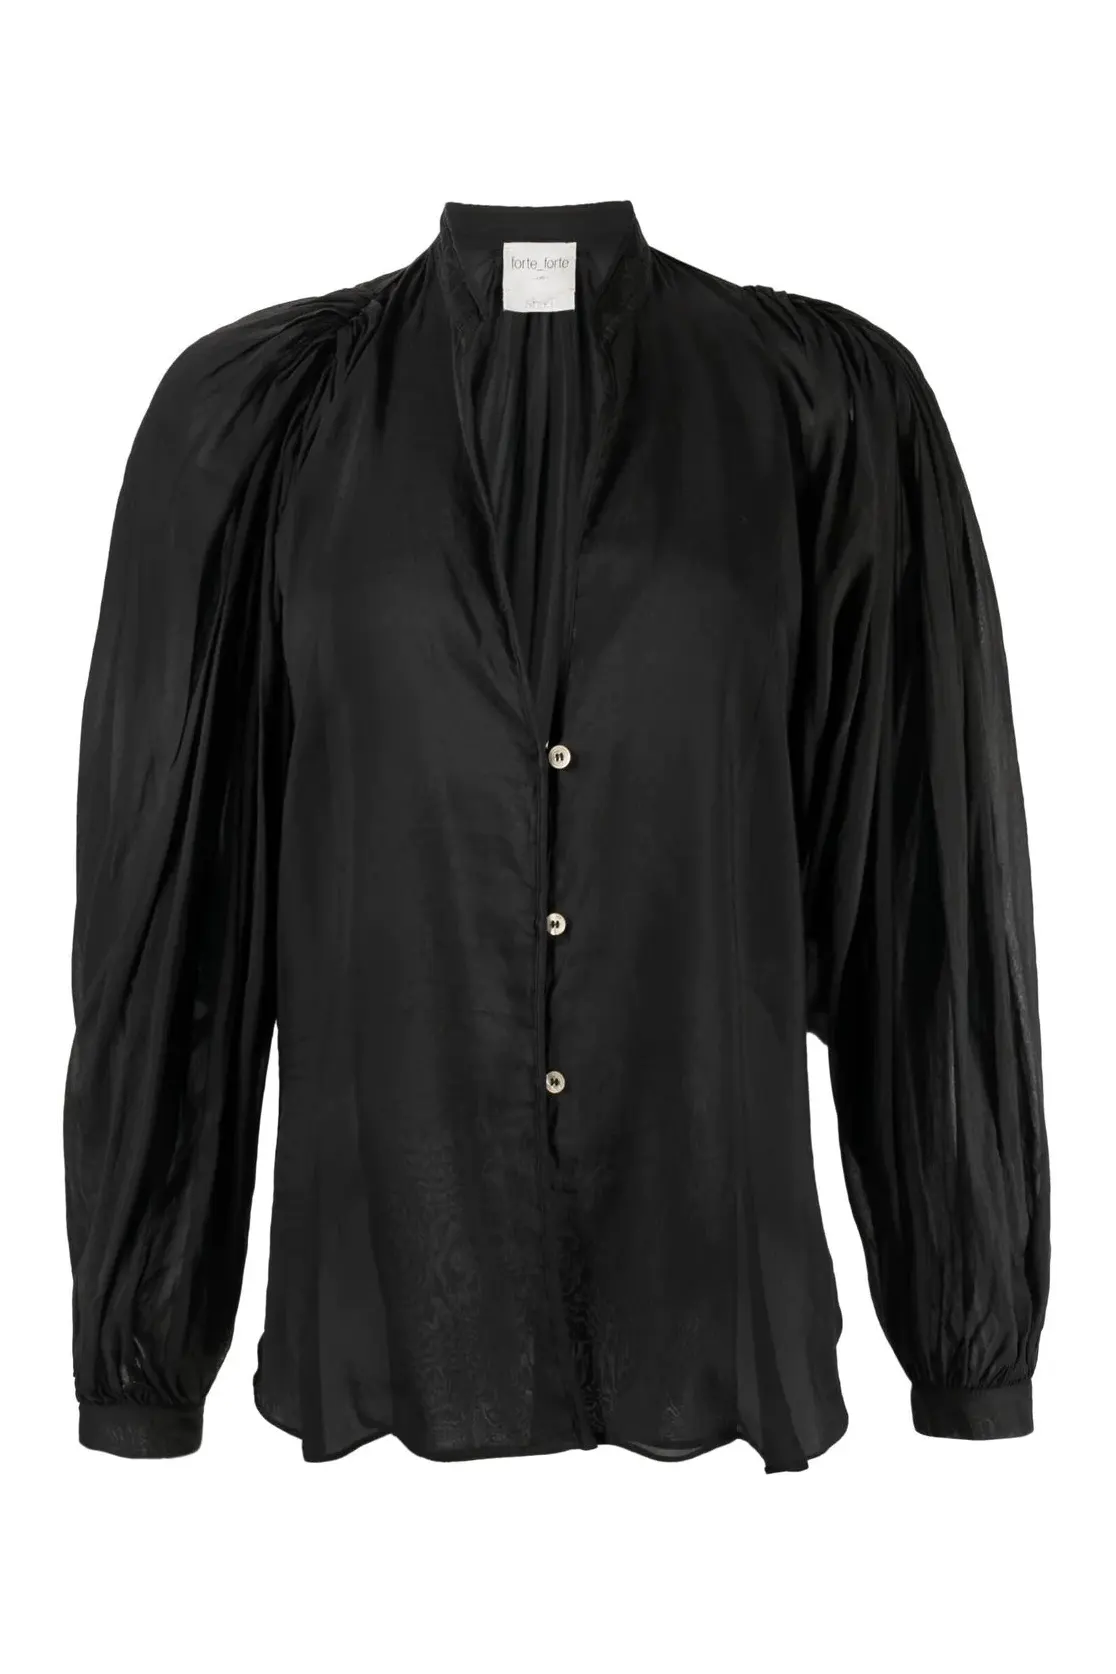 semi-sheer blouse black